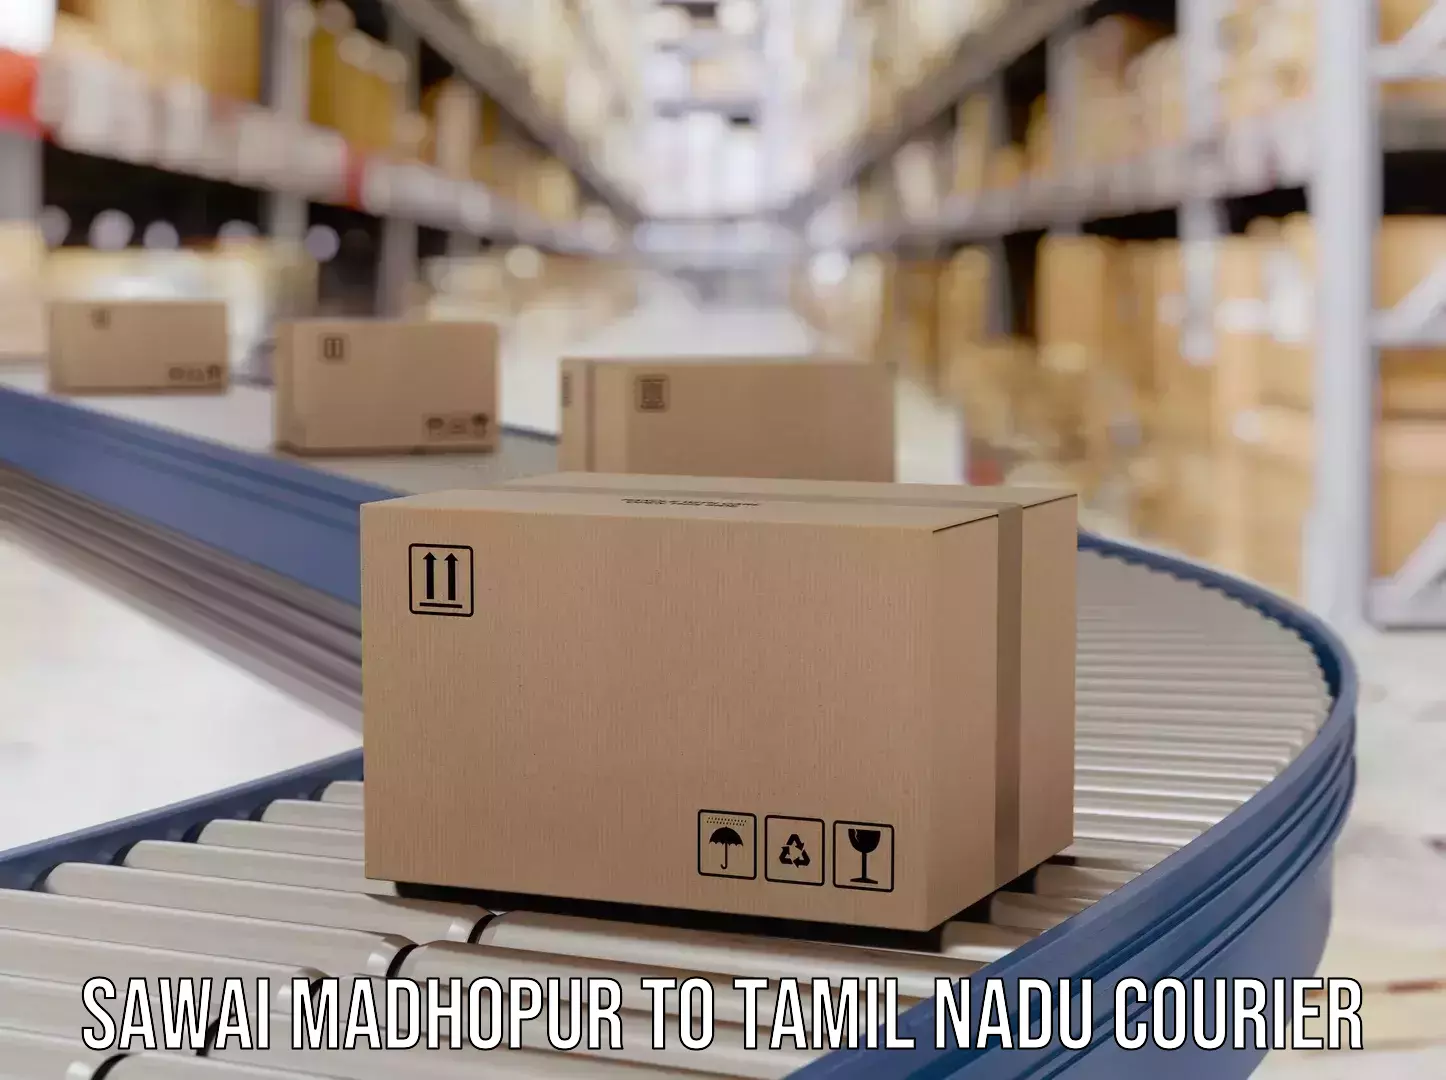 Courier service innovation Sawai Madhopur to Periyakulam